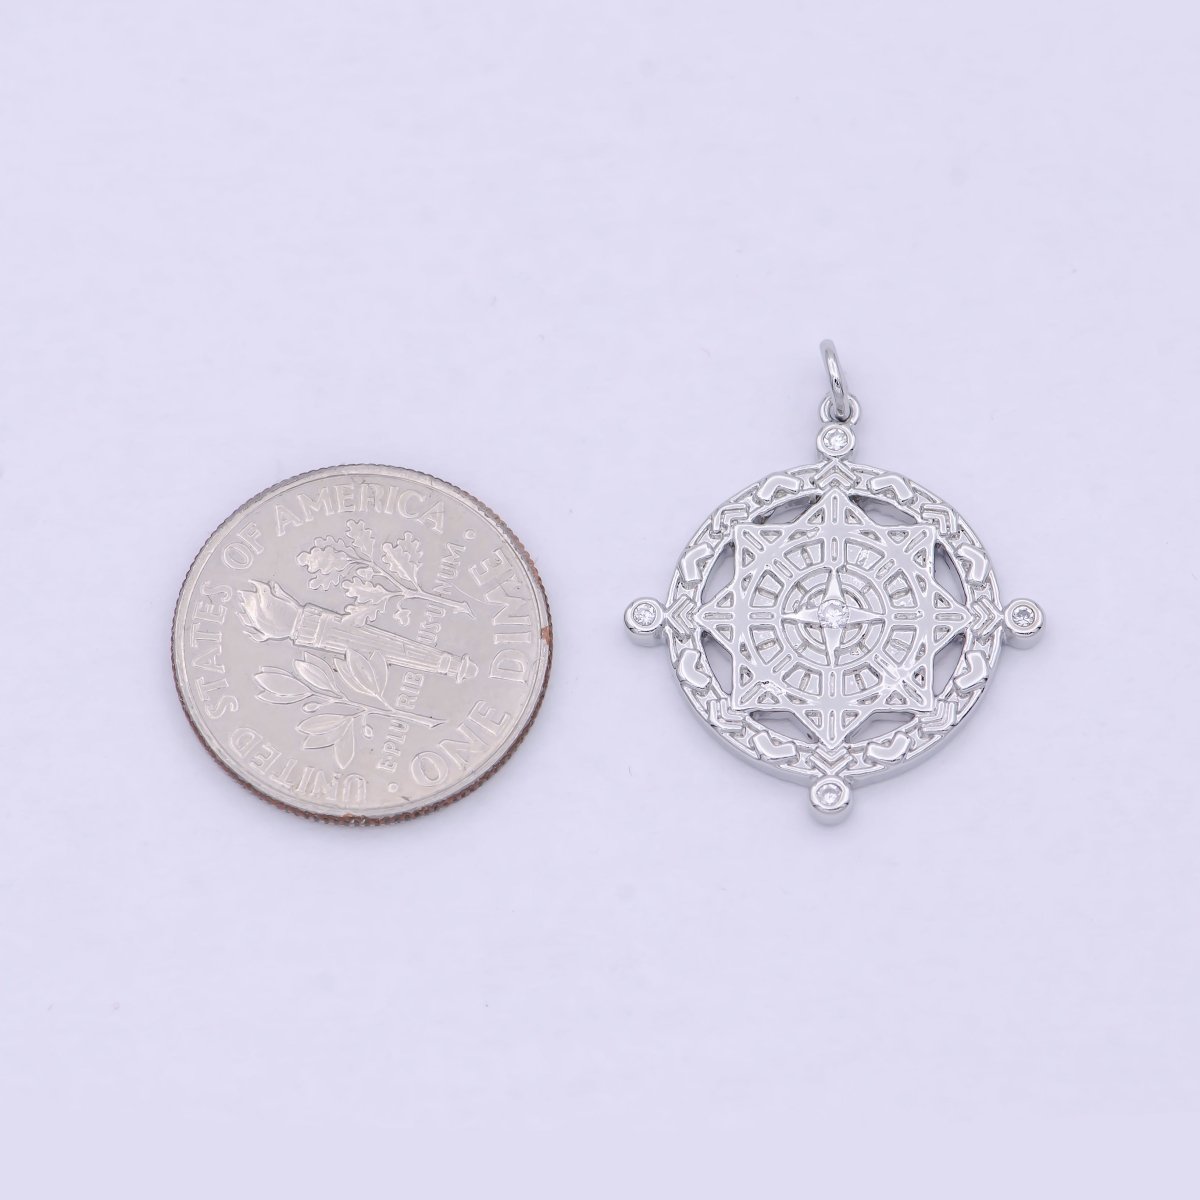 Silver Compass Pendant, cubic zirconia cz diamonds medallion pendant for Necklace Jewelry Making W-182 - DLUXCA